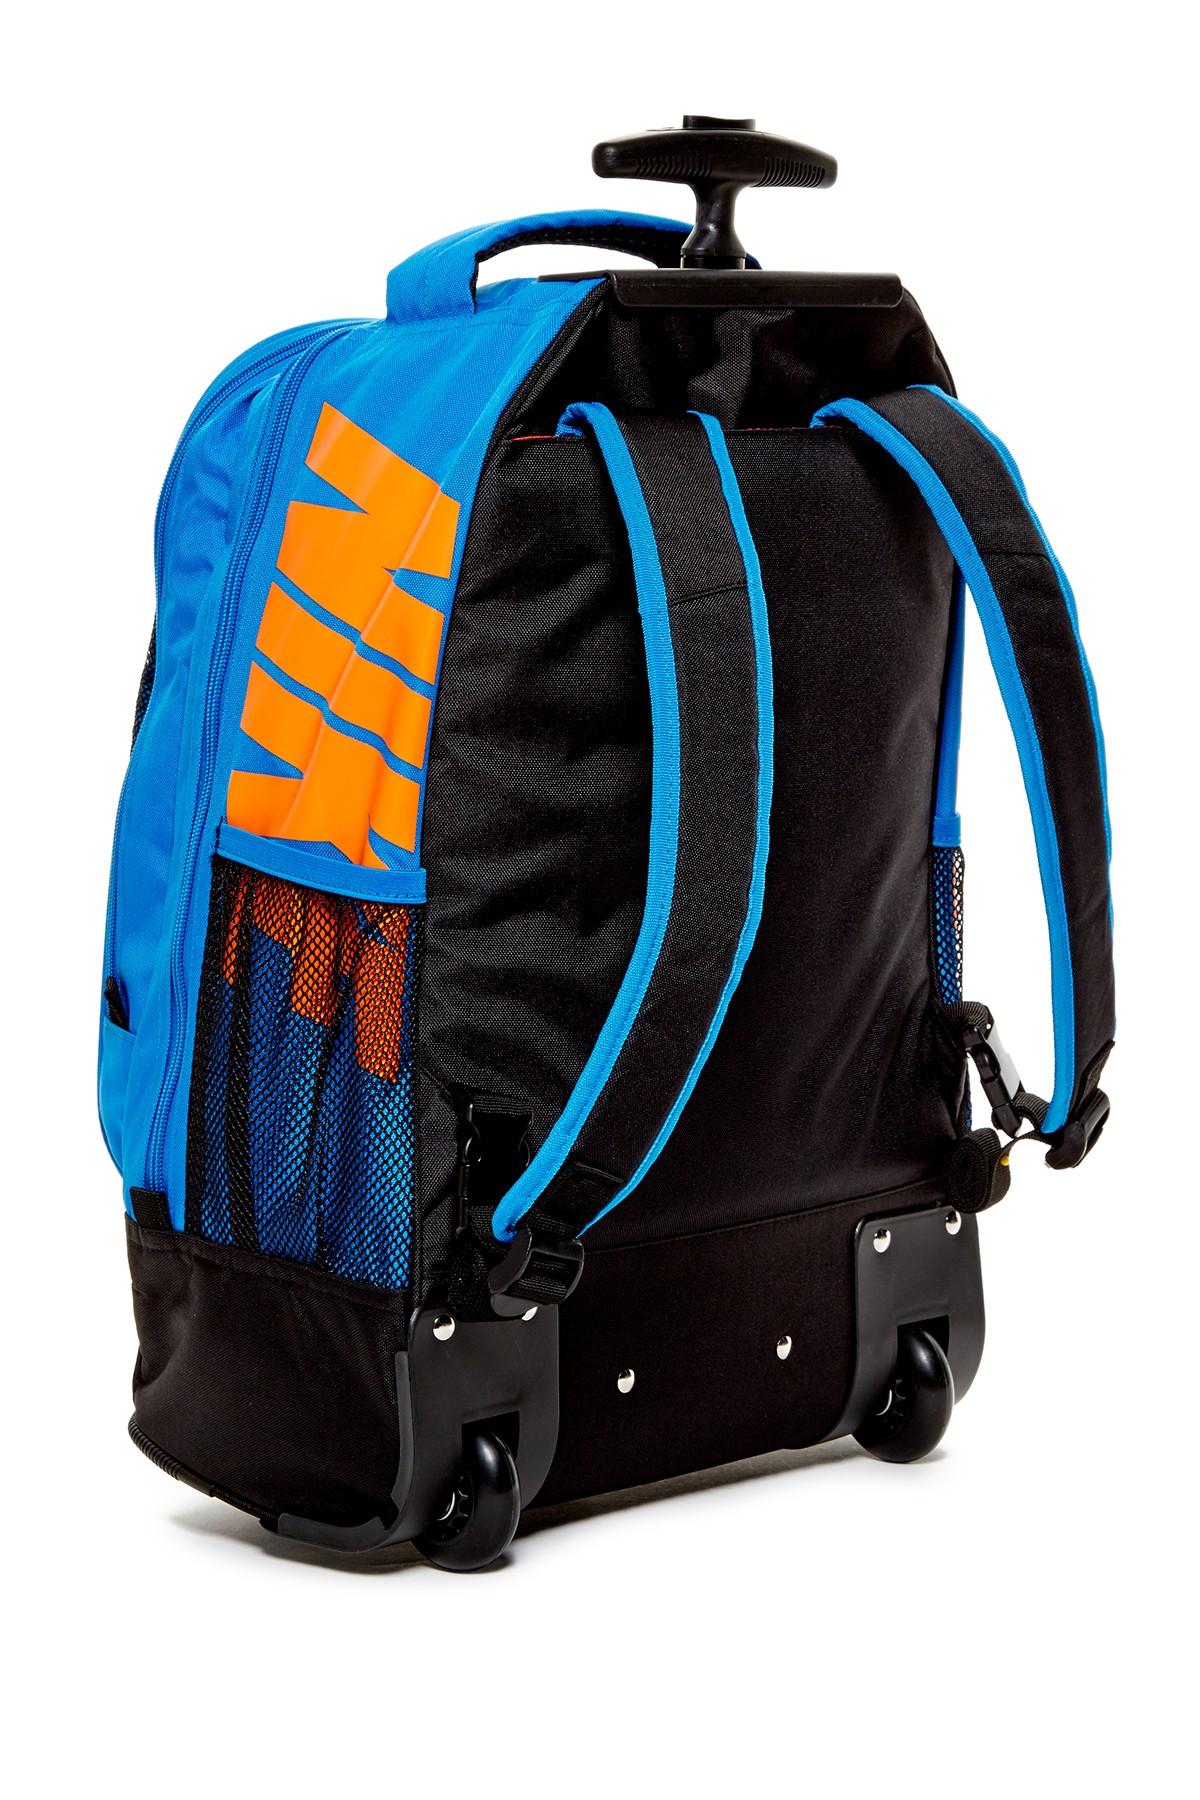 nike rolling backpack blue